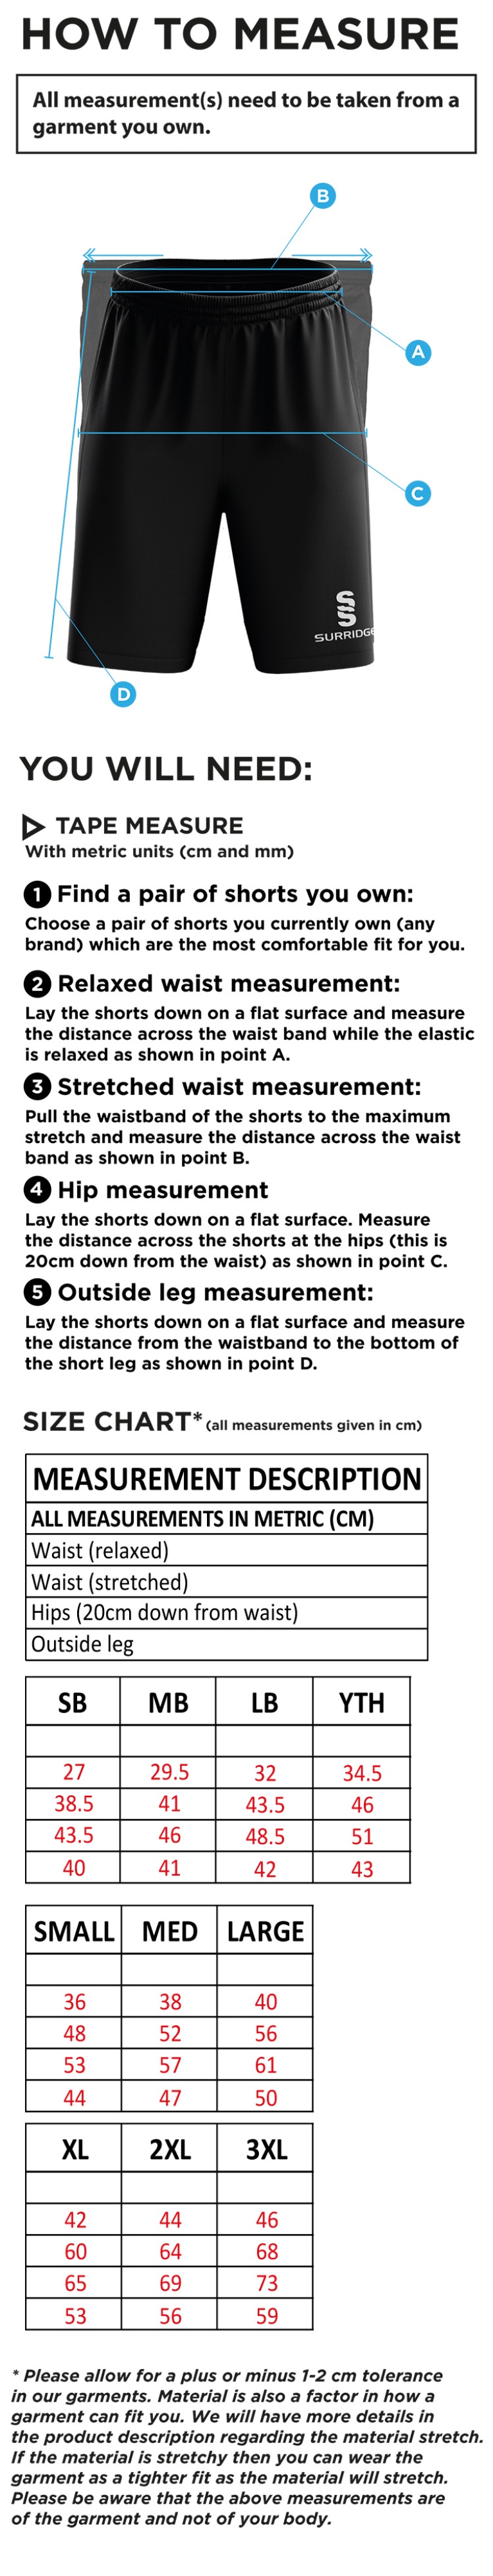 Totteridge Millhillians CC - Ripstop Training Shorts - Size Guide